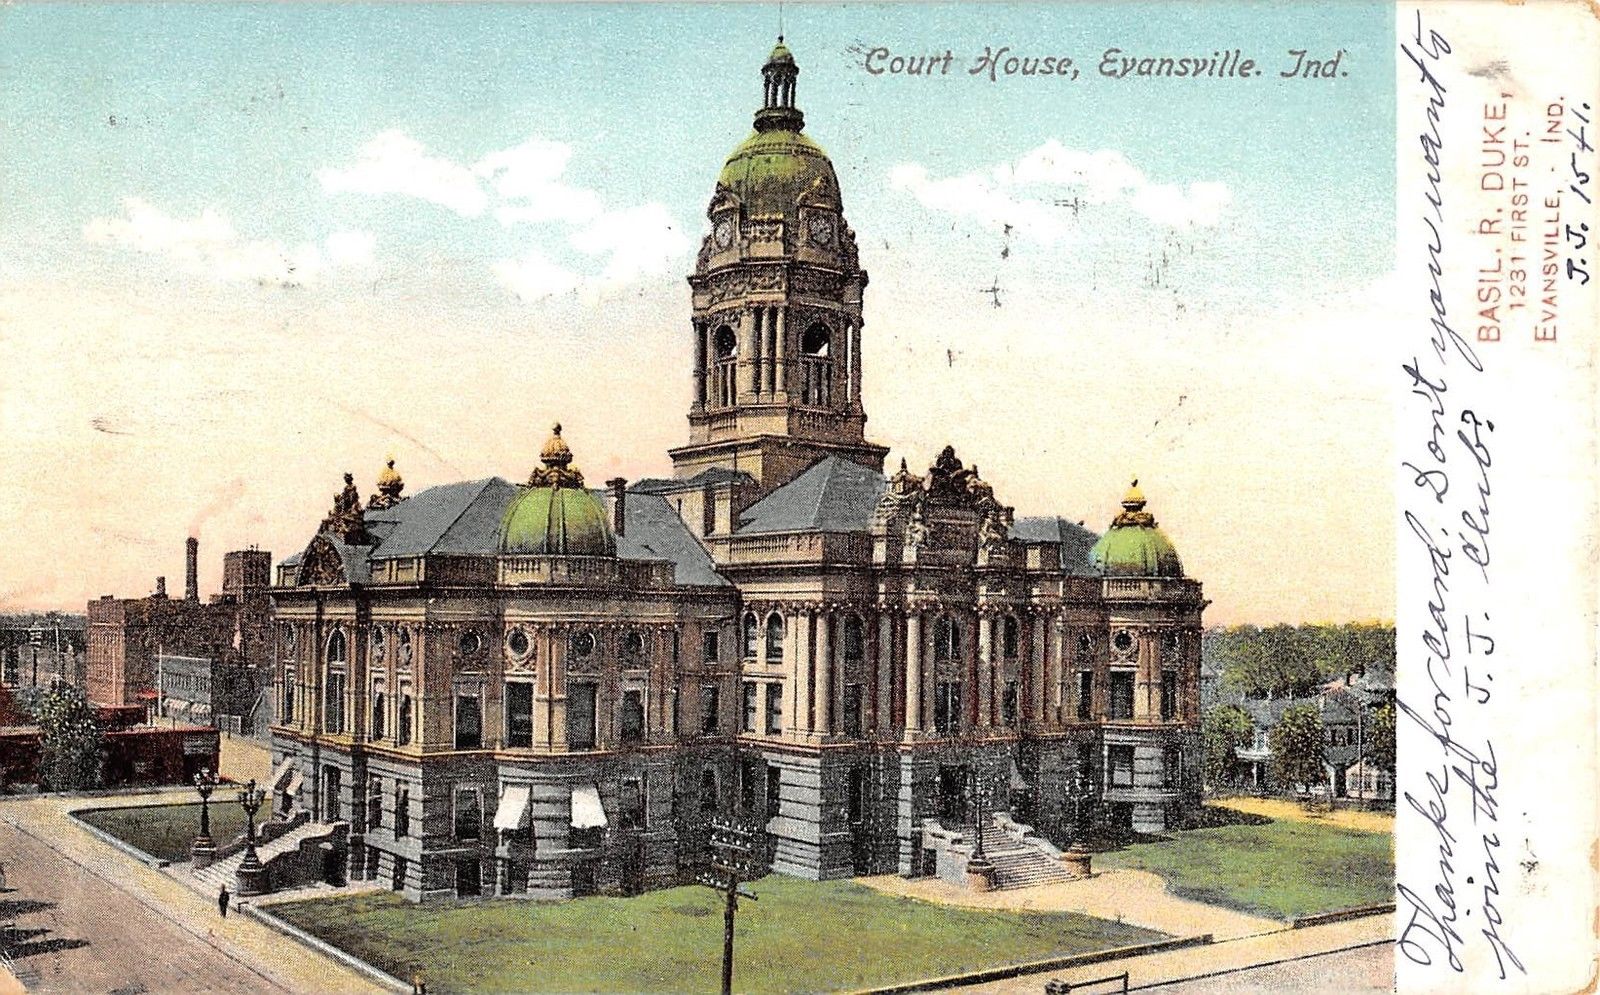 Evansville Indiana Court House antique postcard V4740 Mary L Martin